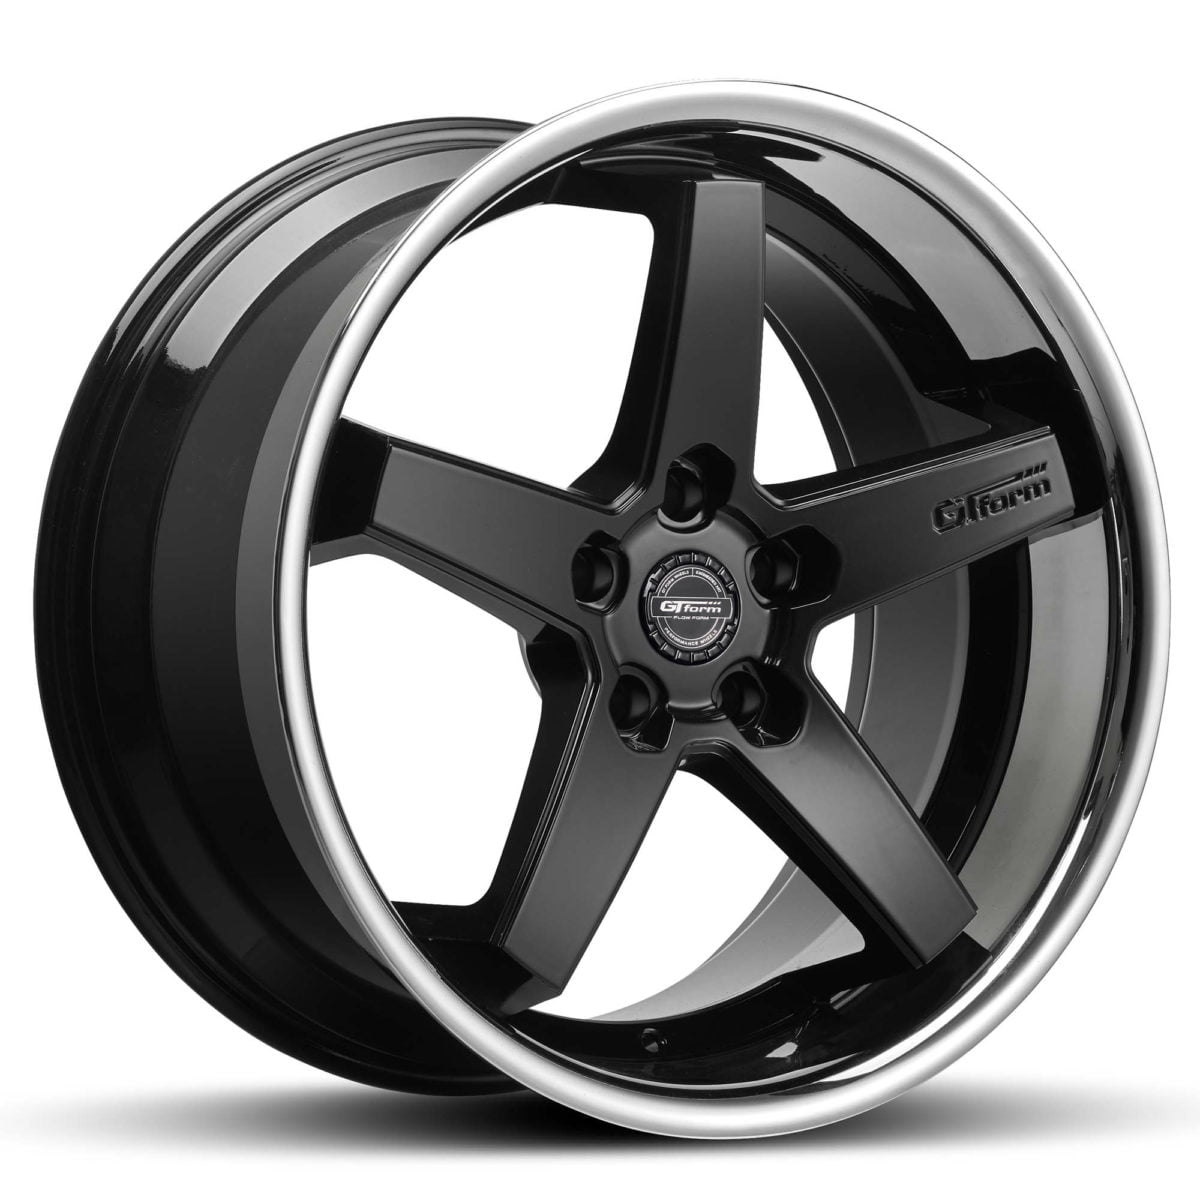 GT Form Legacy gloss black chrome lip wheels car rims